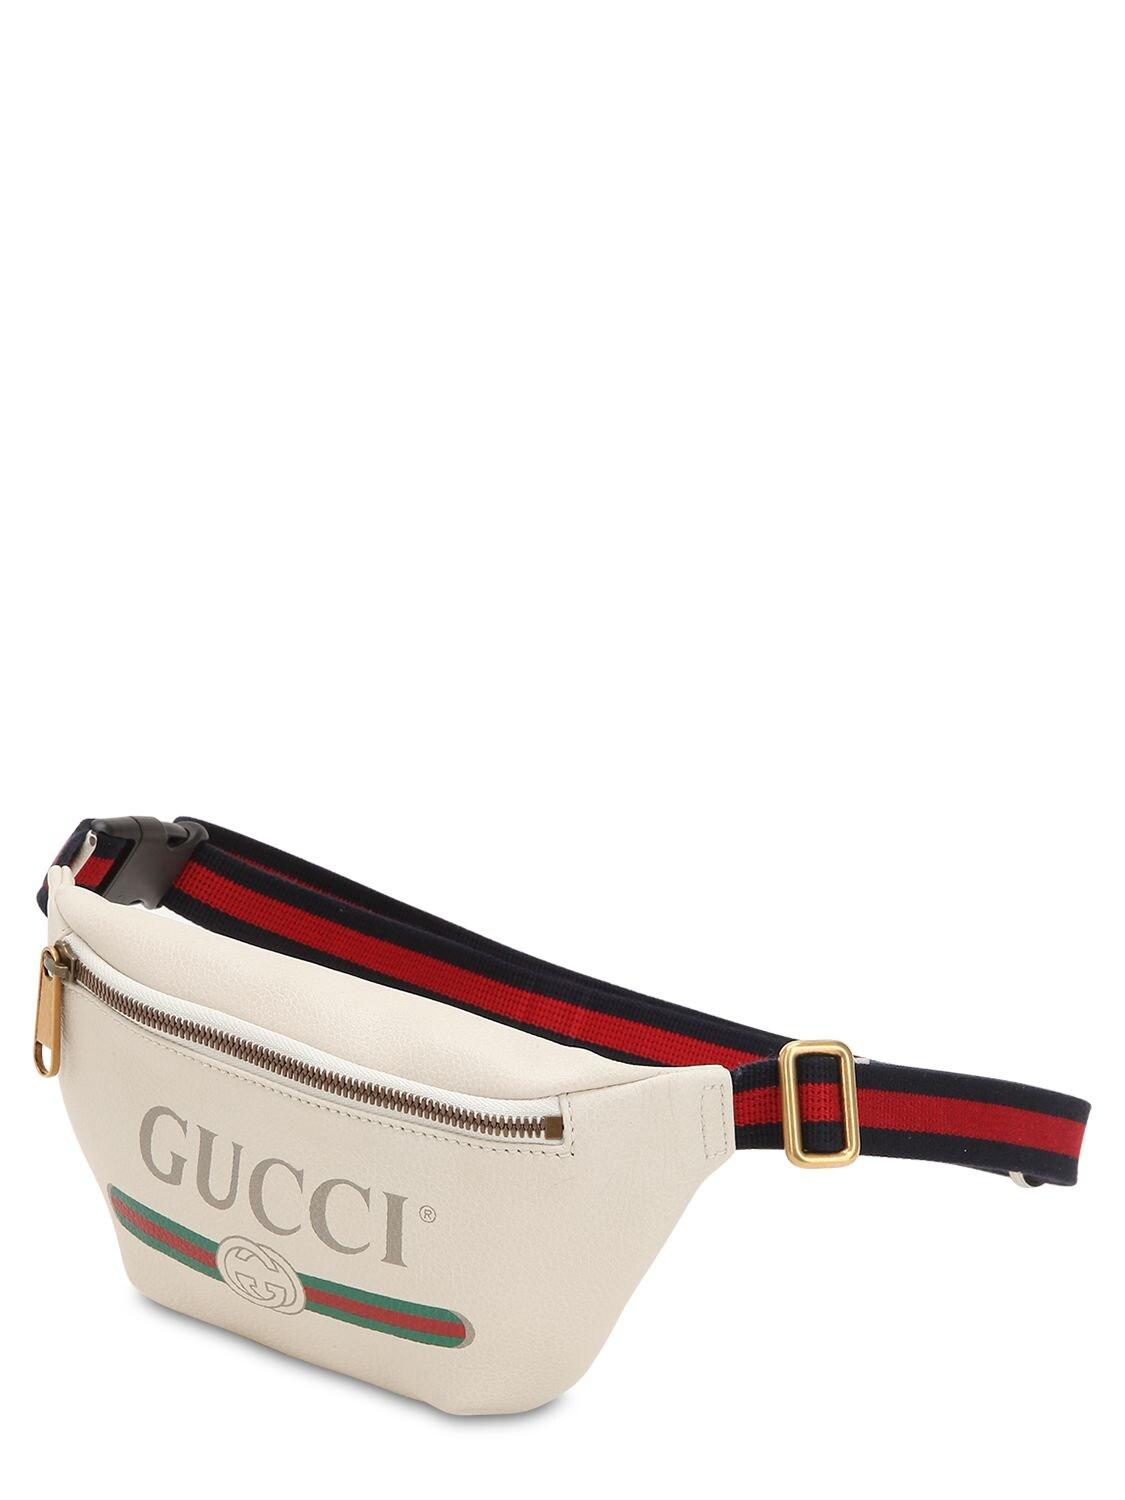 gucci print leather belt bag white